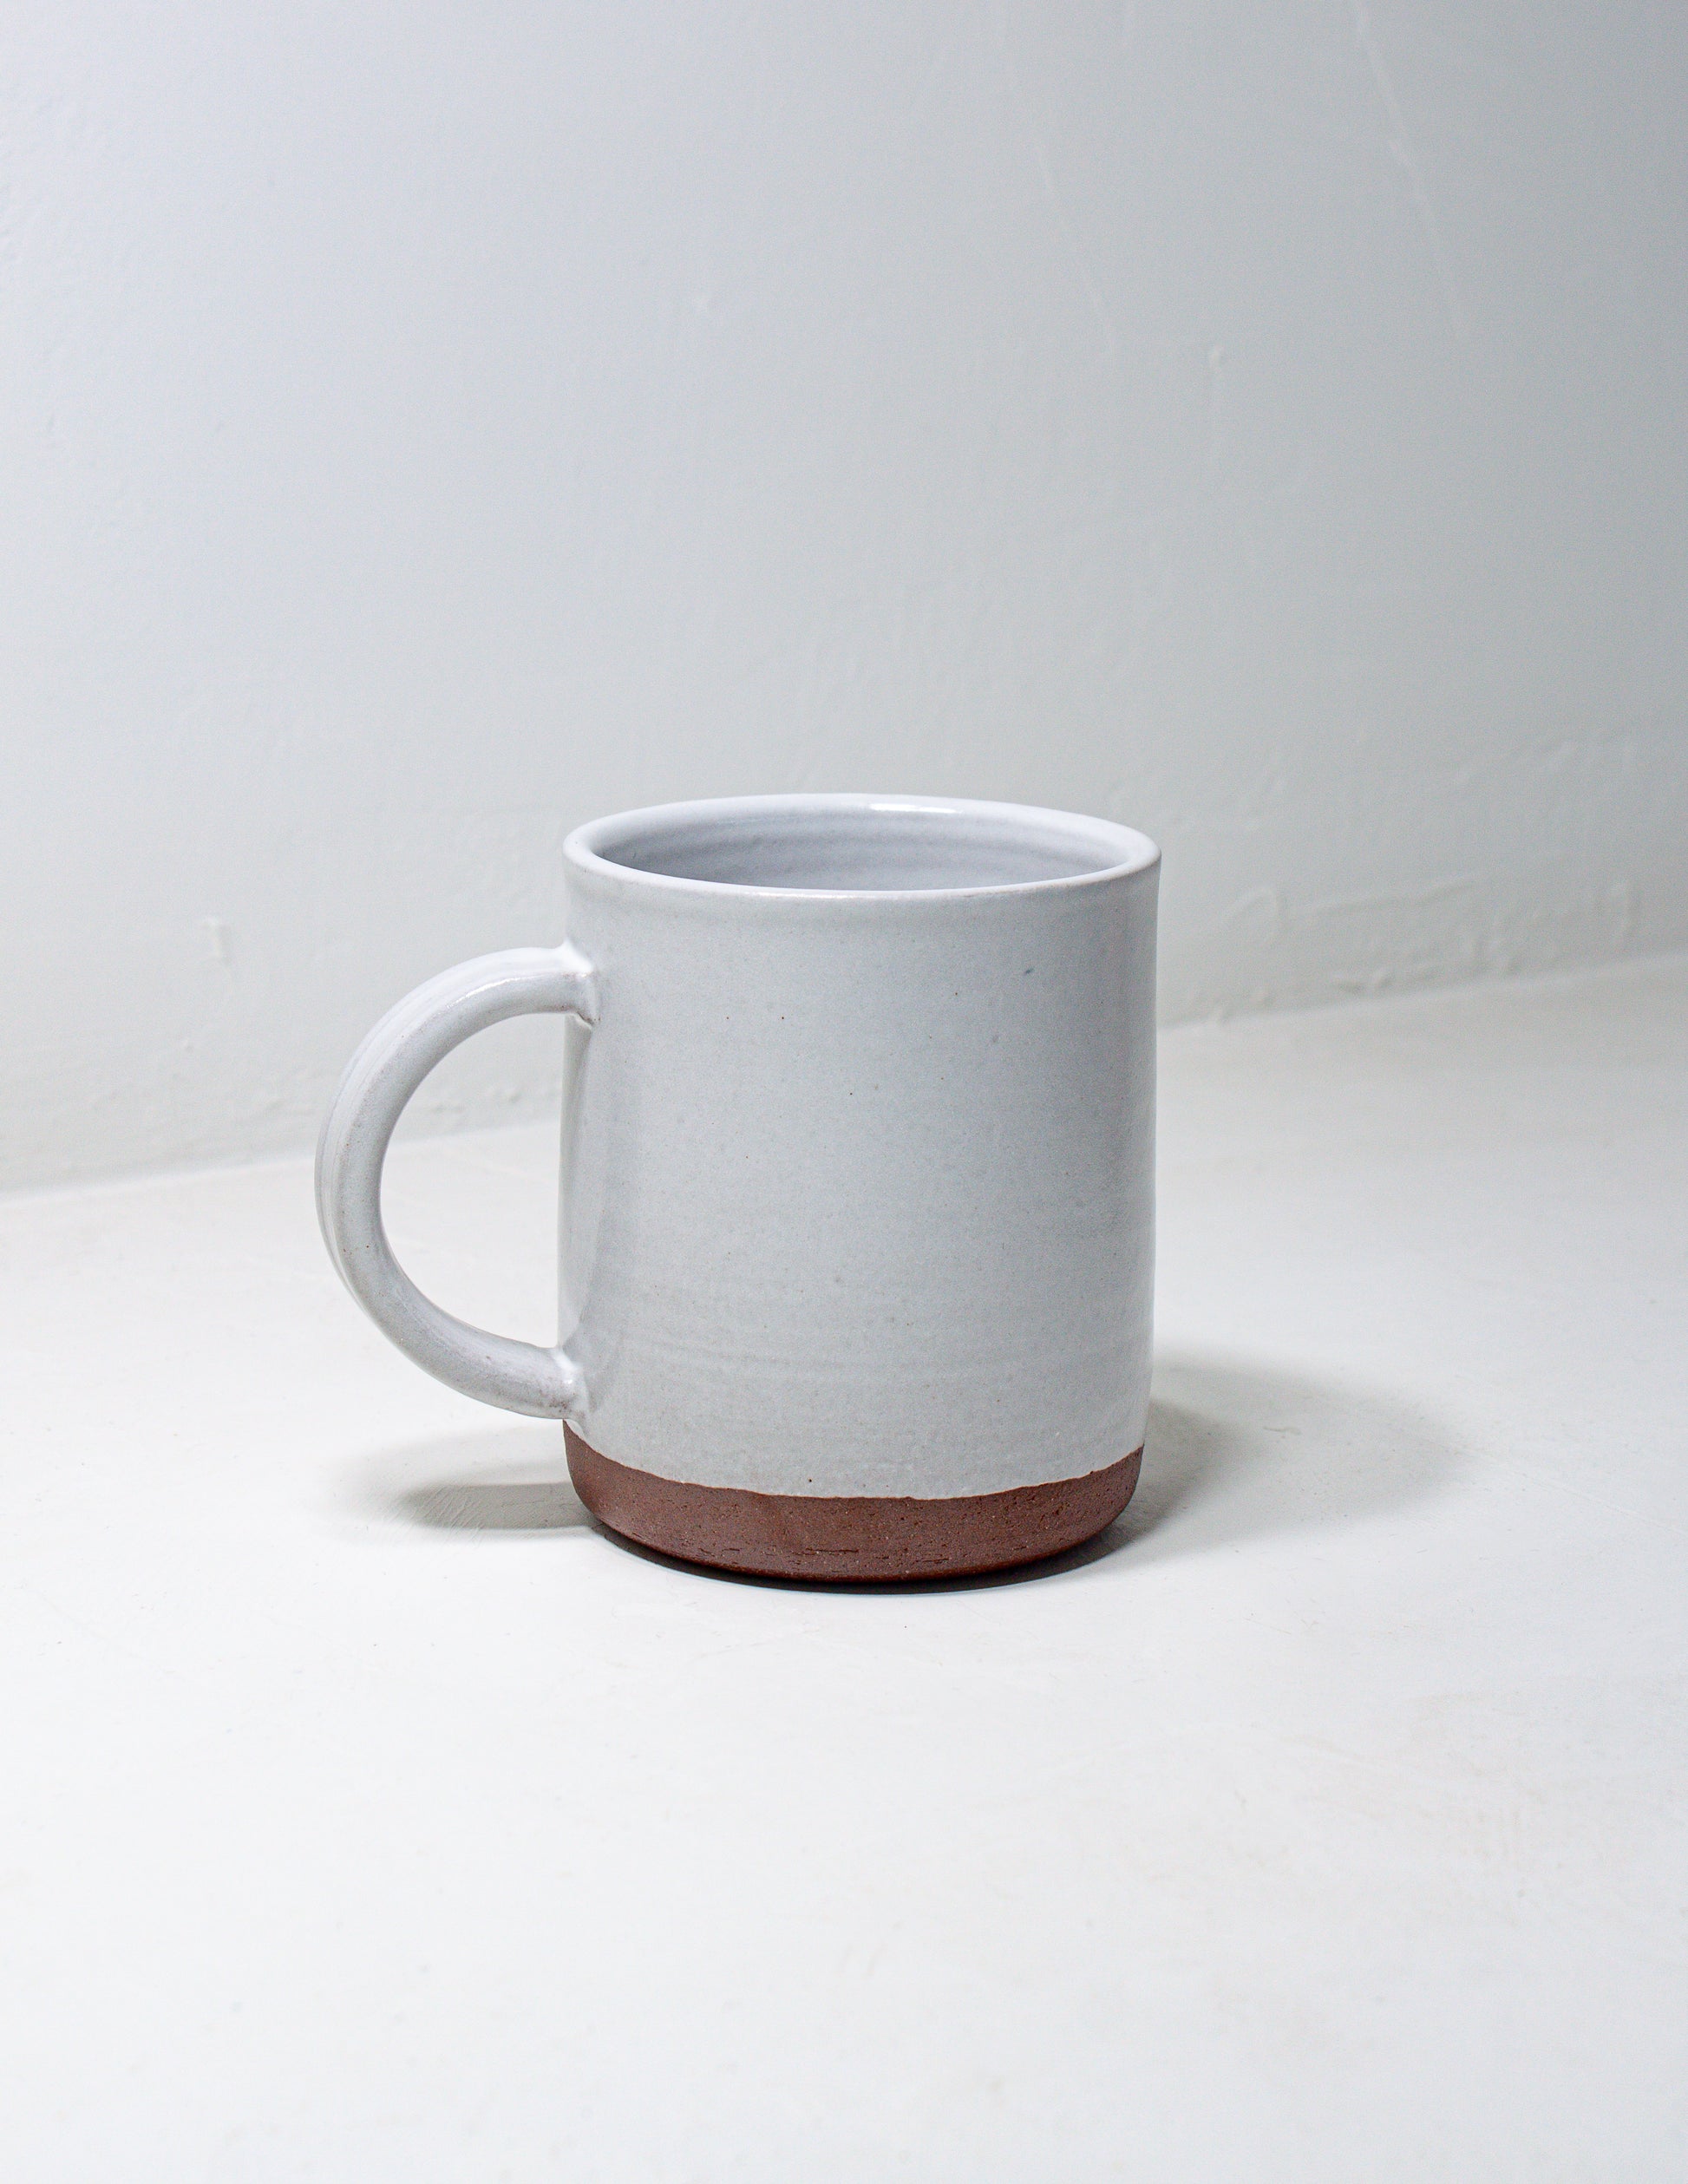 mid century modern coffee mug handmade and glazed in white